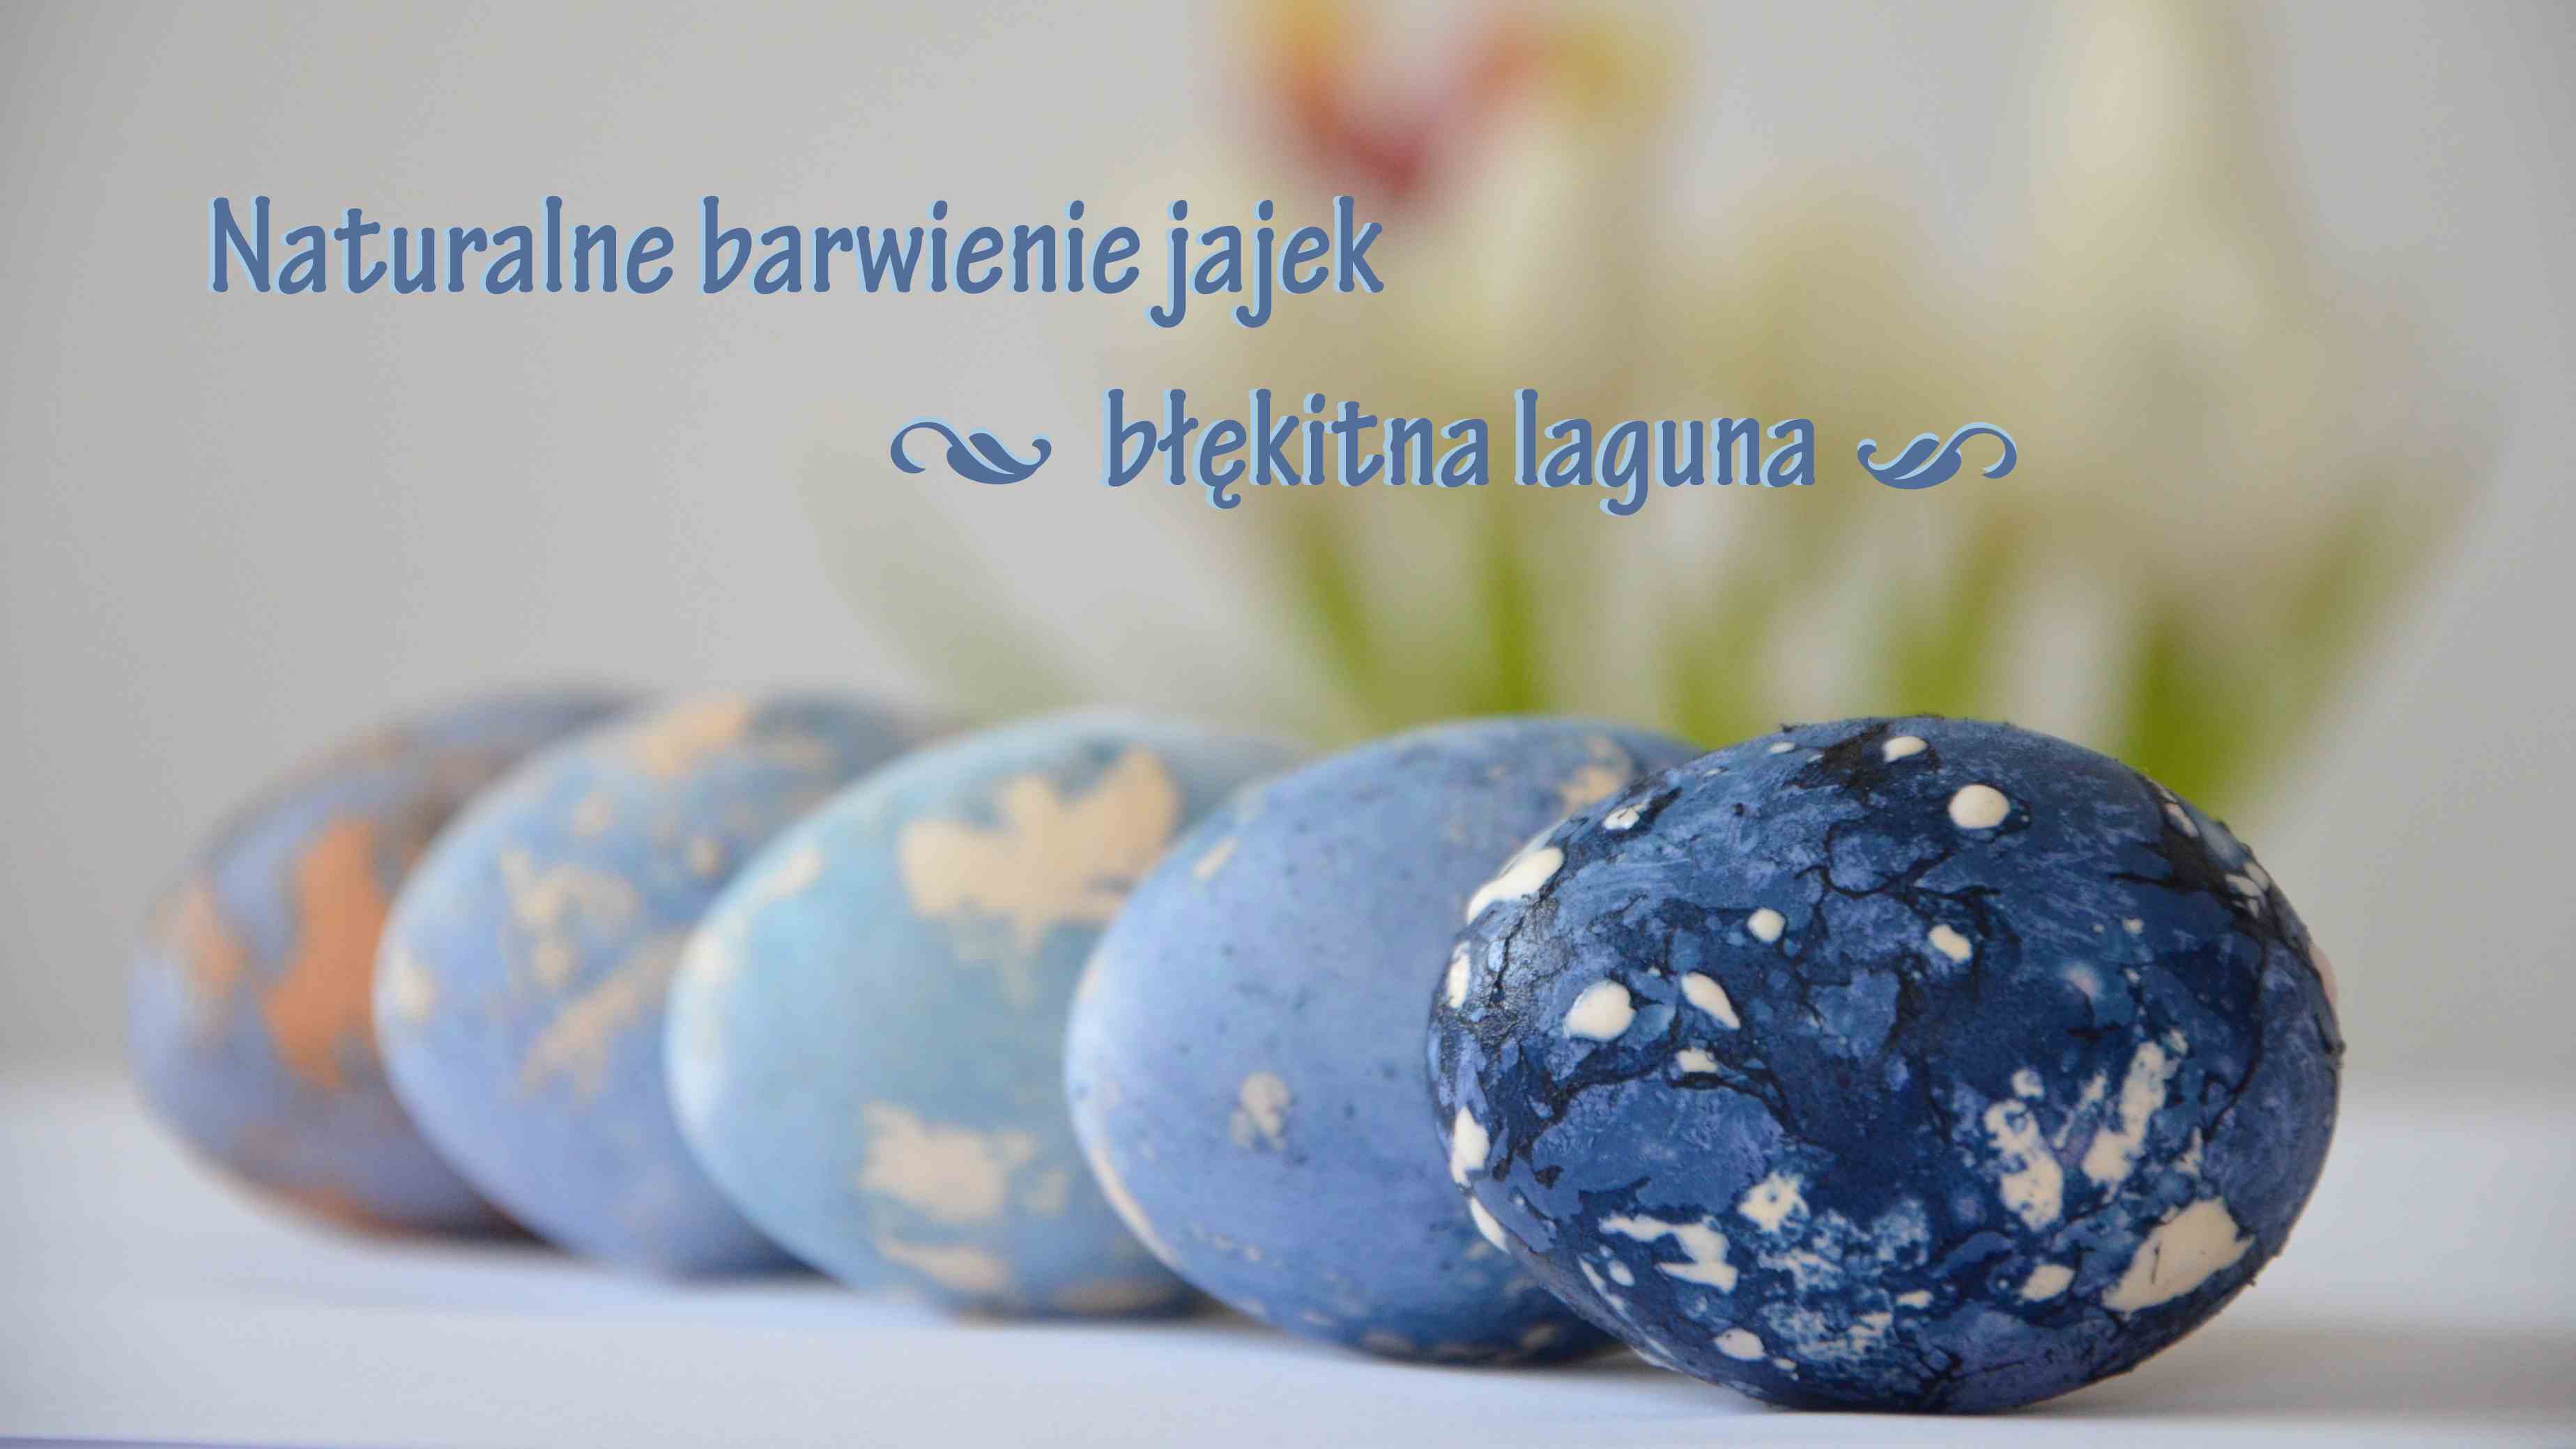 Naturalne barwienie jajek, błękitna laguna, ilustracja